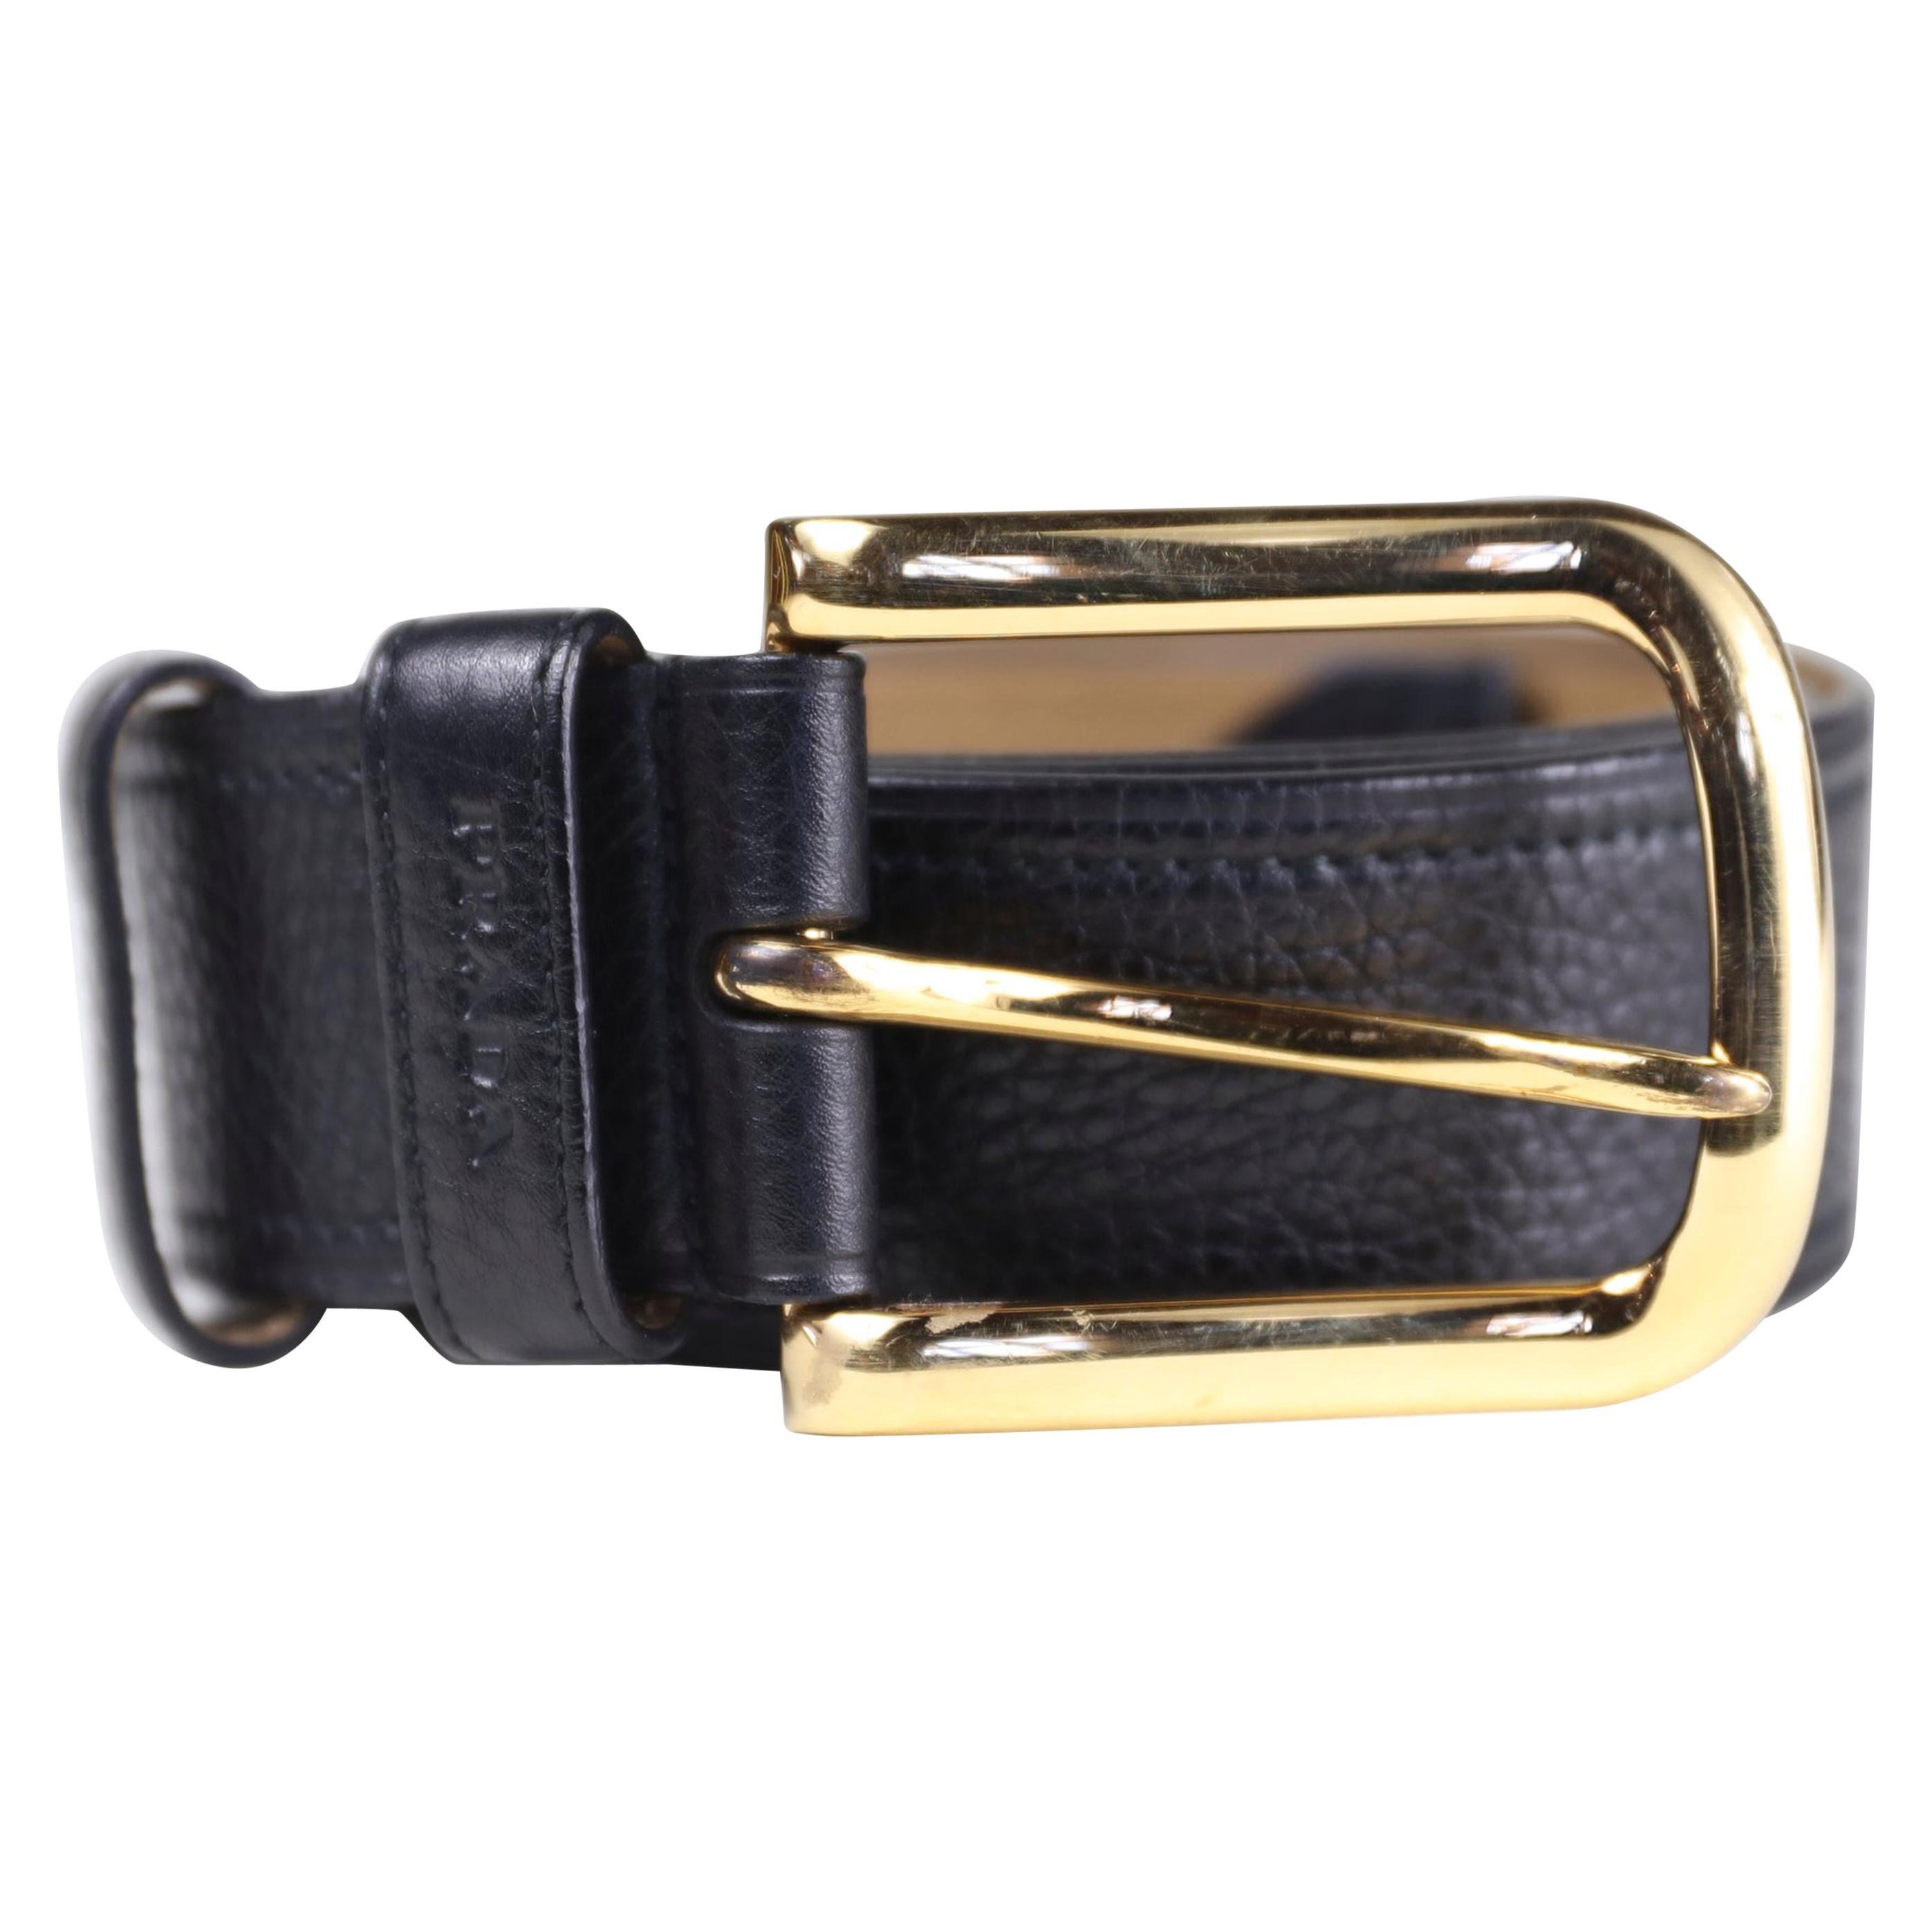 Prada Size 36 Leather Belt with Gold Hardware